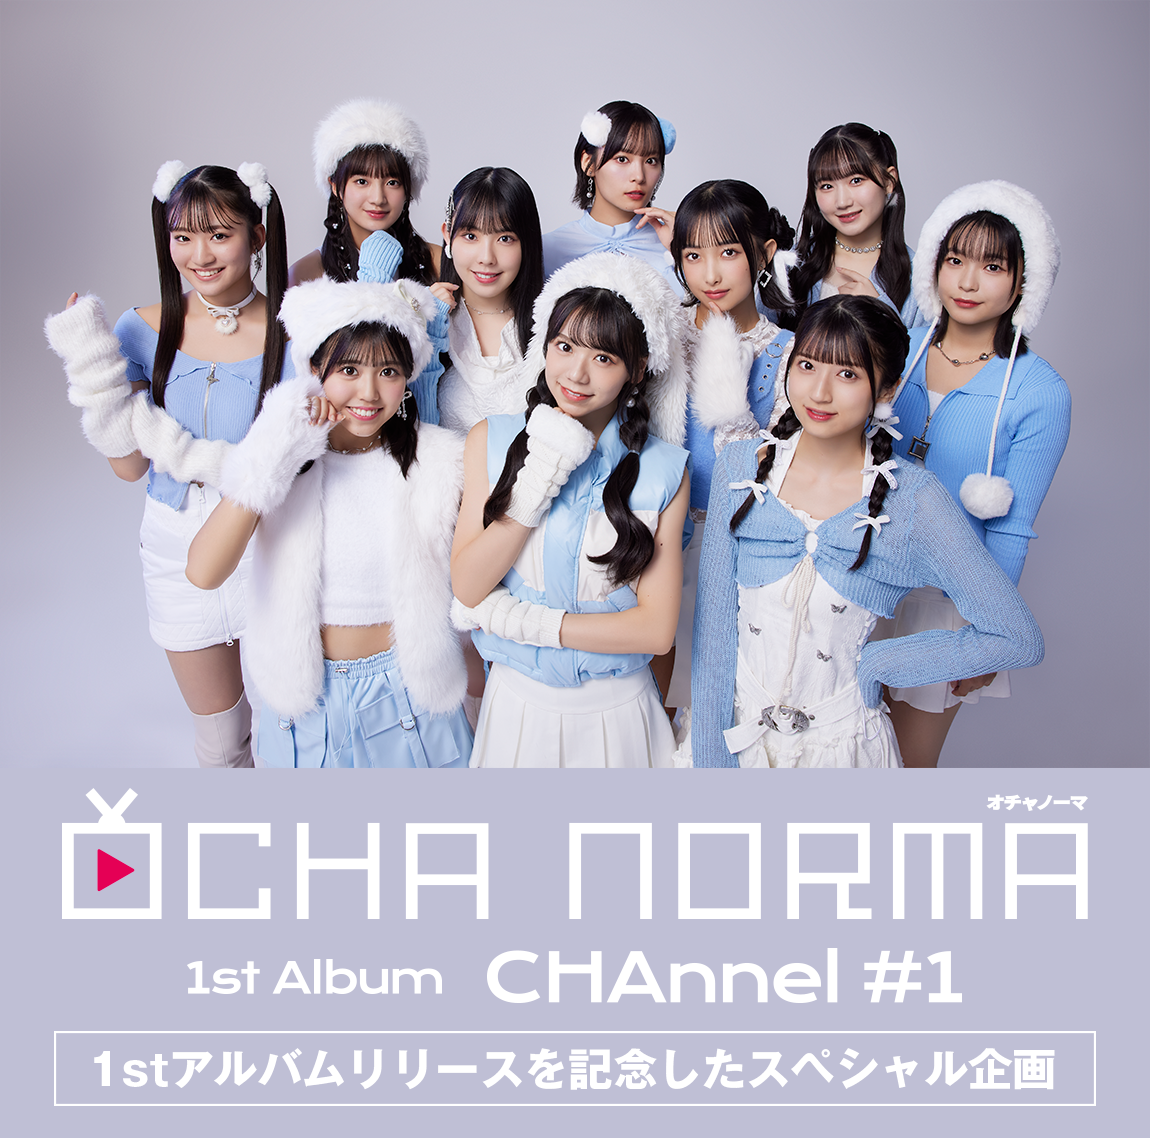 OCHA NORMA 1stアルバム『CHAnnel #1』のリリースを記念して“HMV推し